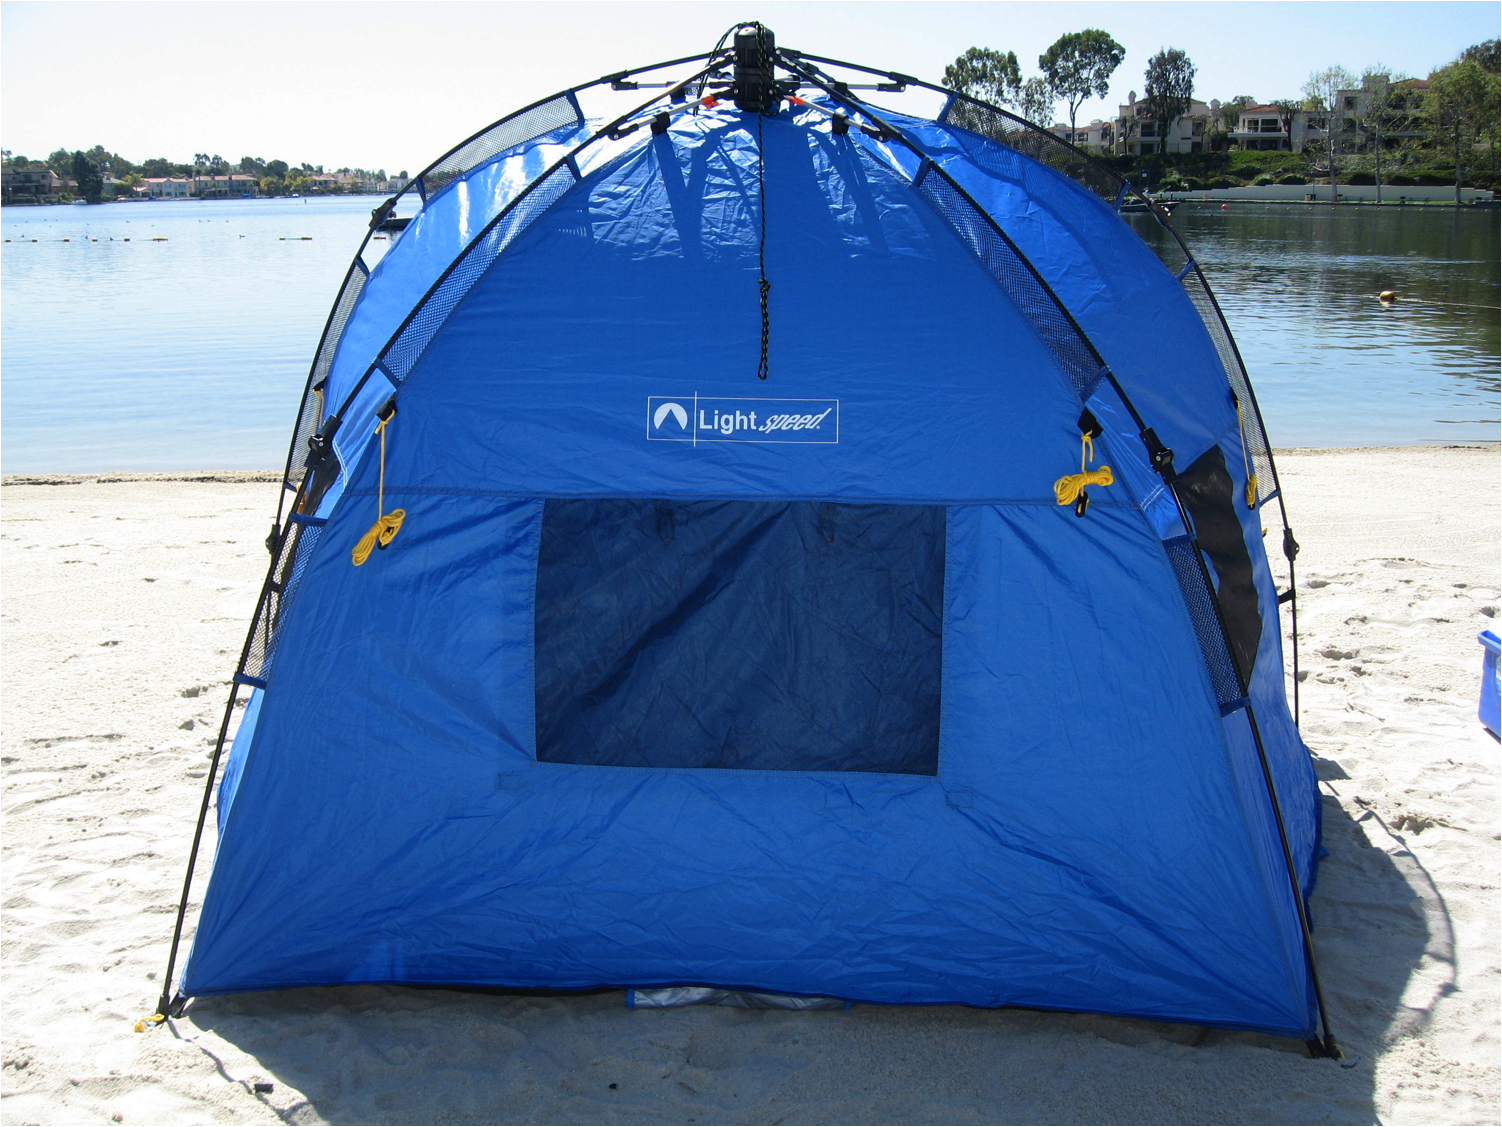 Light speed tent